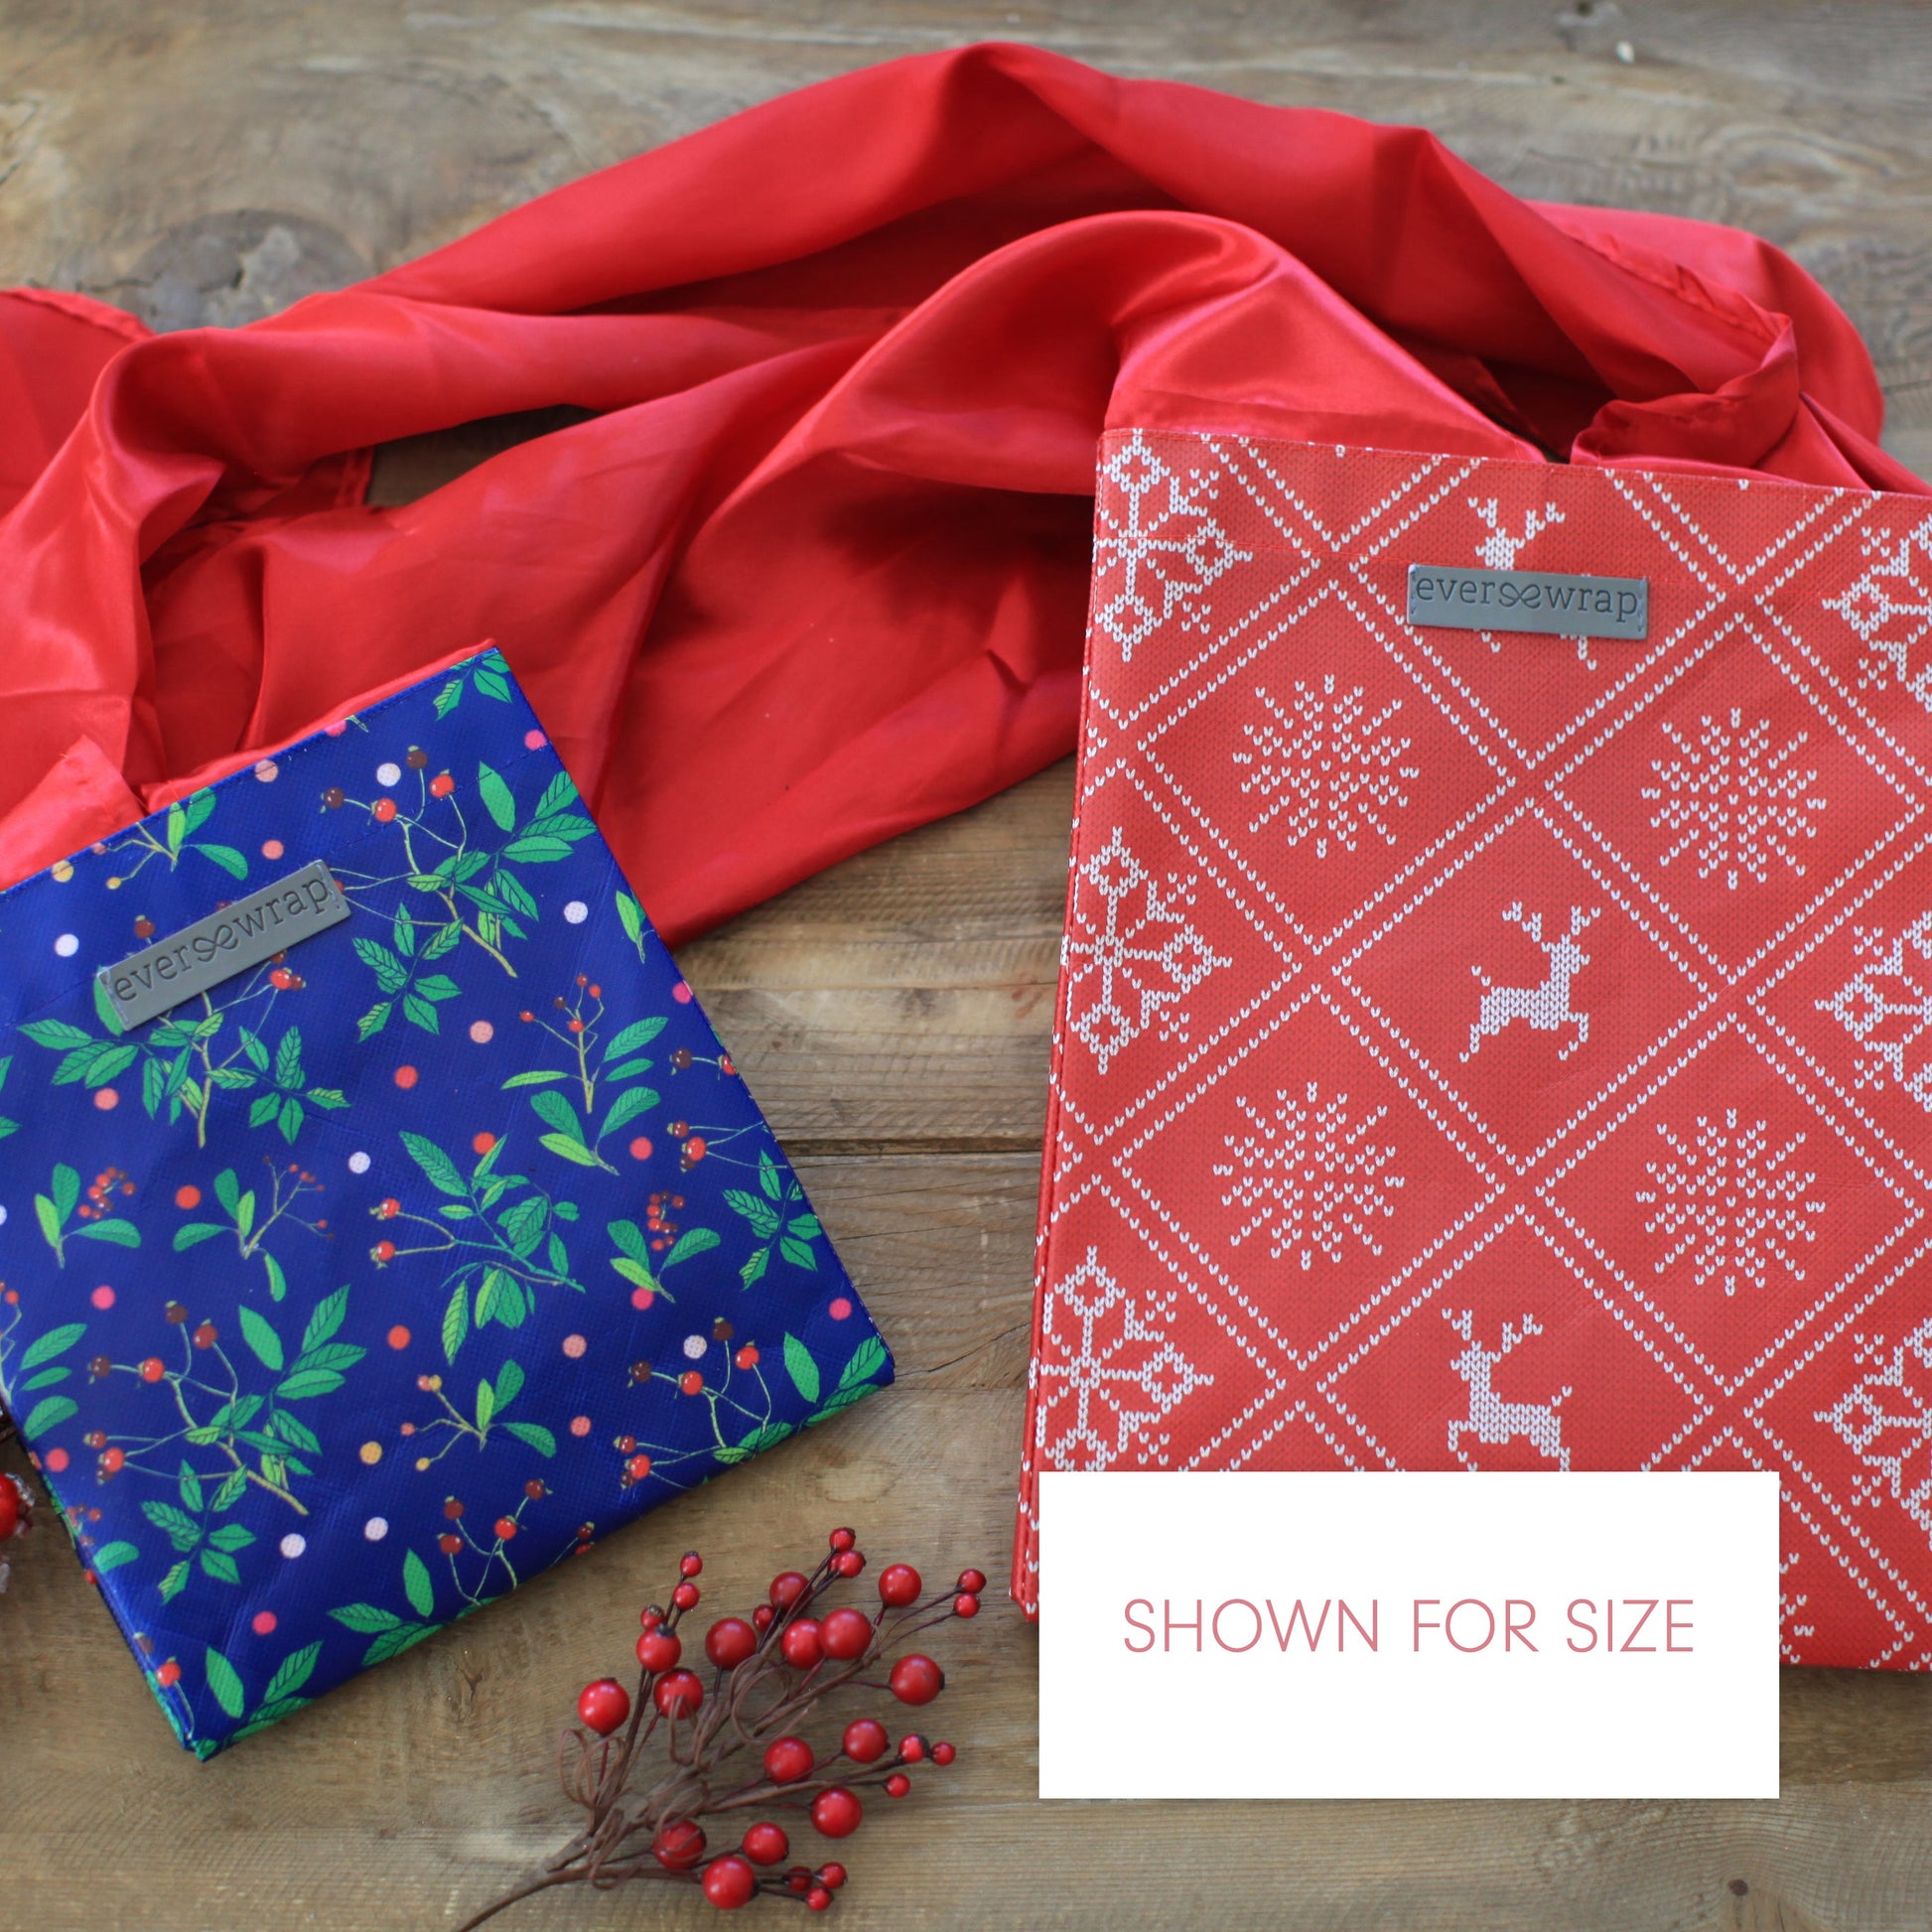 12 Wholesale Home Basics Textured Pvc Christmas Wrap Storage Bag, Red - at  